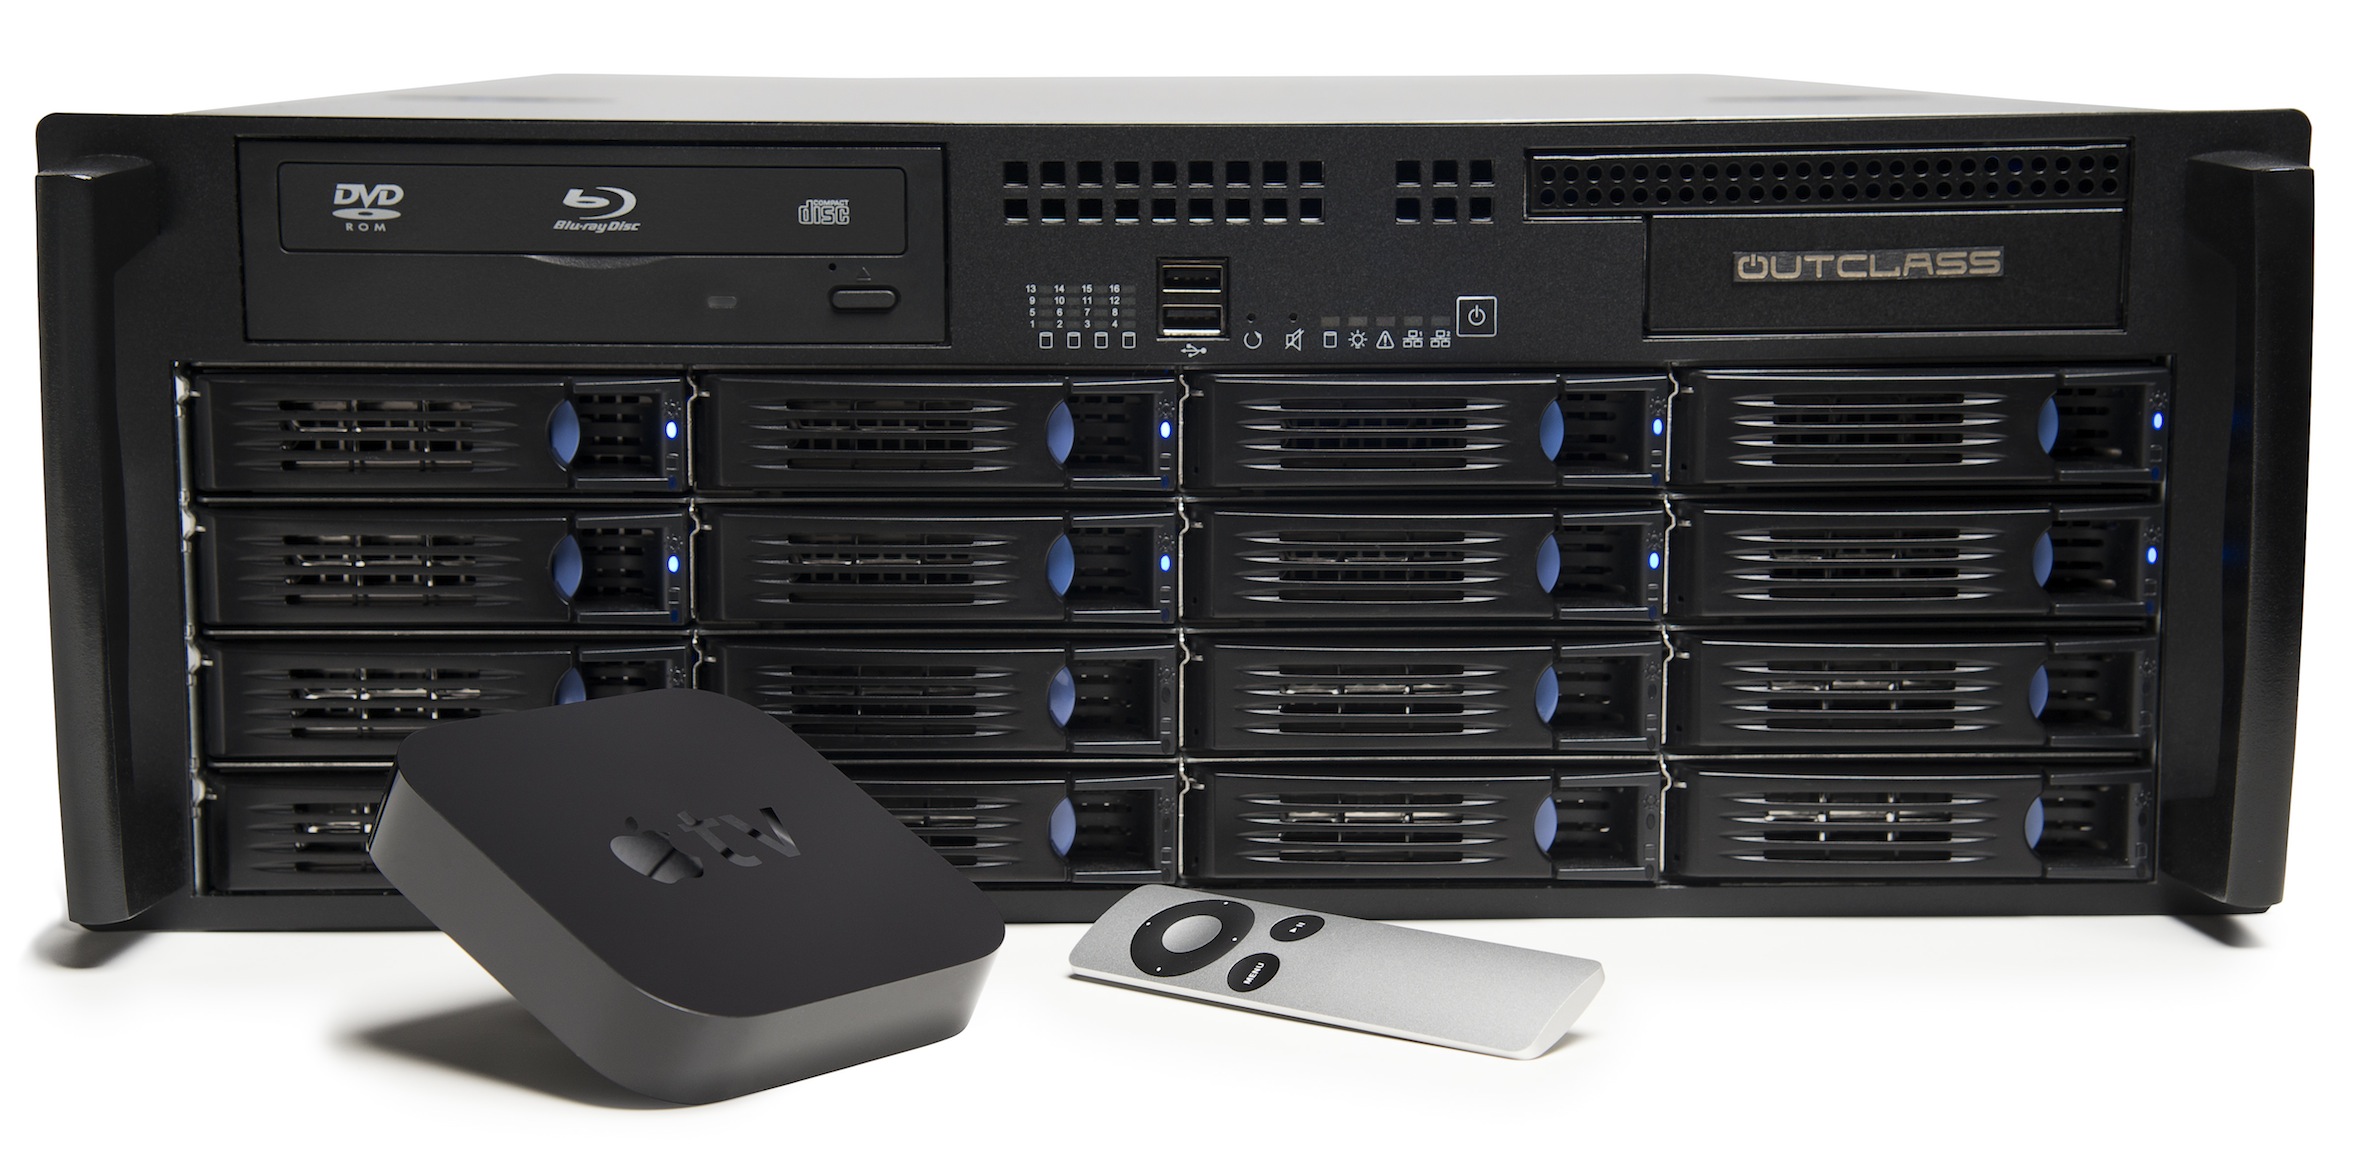 Сервера 7.3 5. ПК-медиасервер Nettop. Сервер для телевизора. Сервер Samsung. Медиасервер для самолётов.